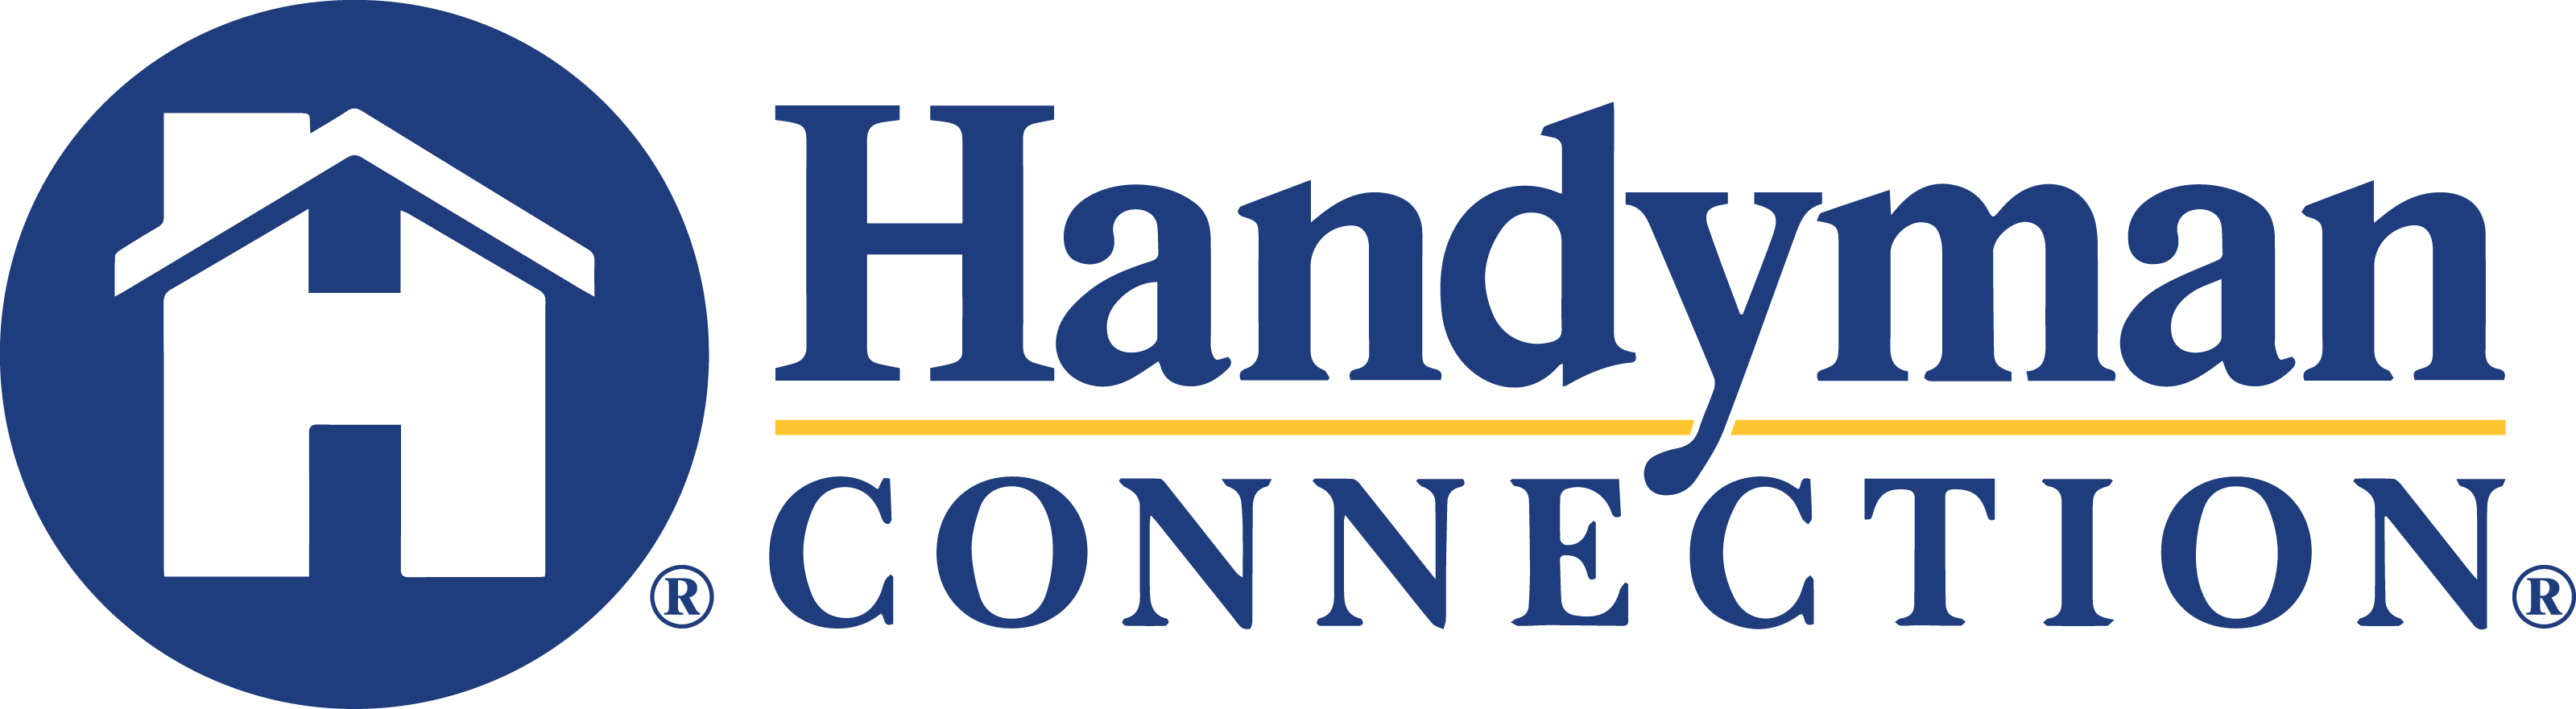 https://handymanconnection.com/golden/wp-content/uploads/sites/21/2021/05/HandymanConnection-logo-2-1.png